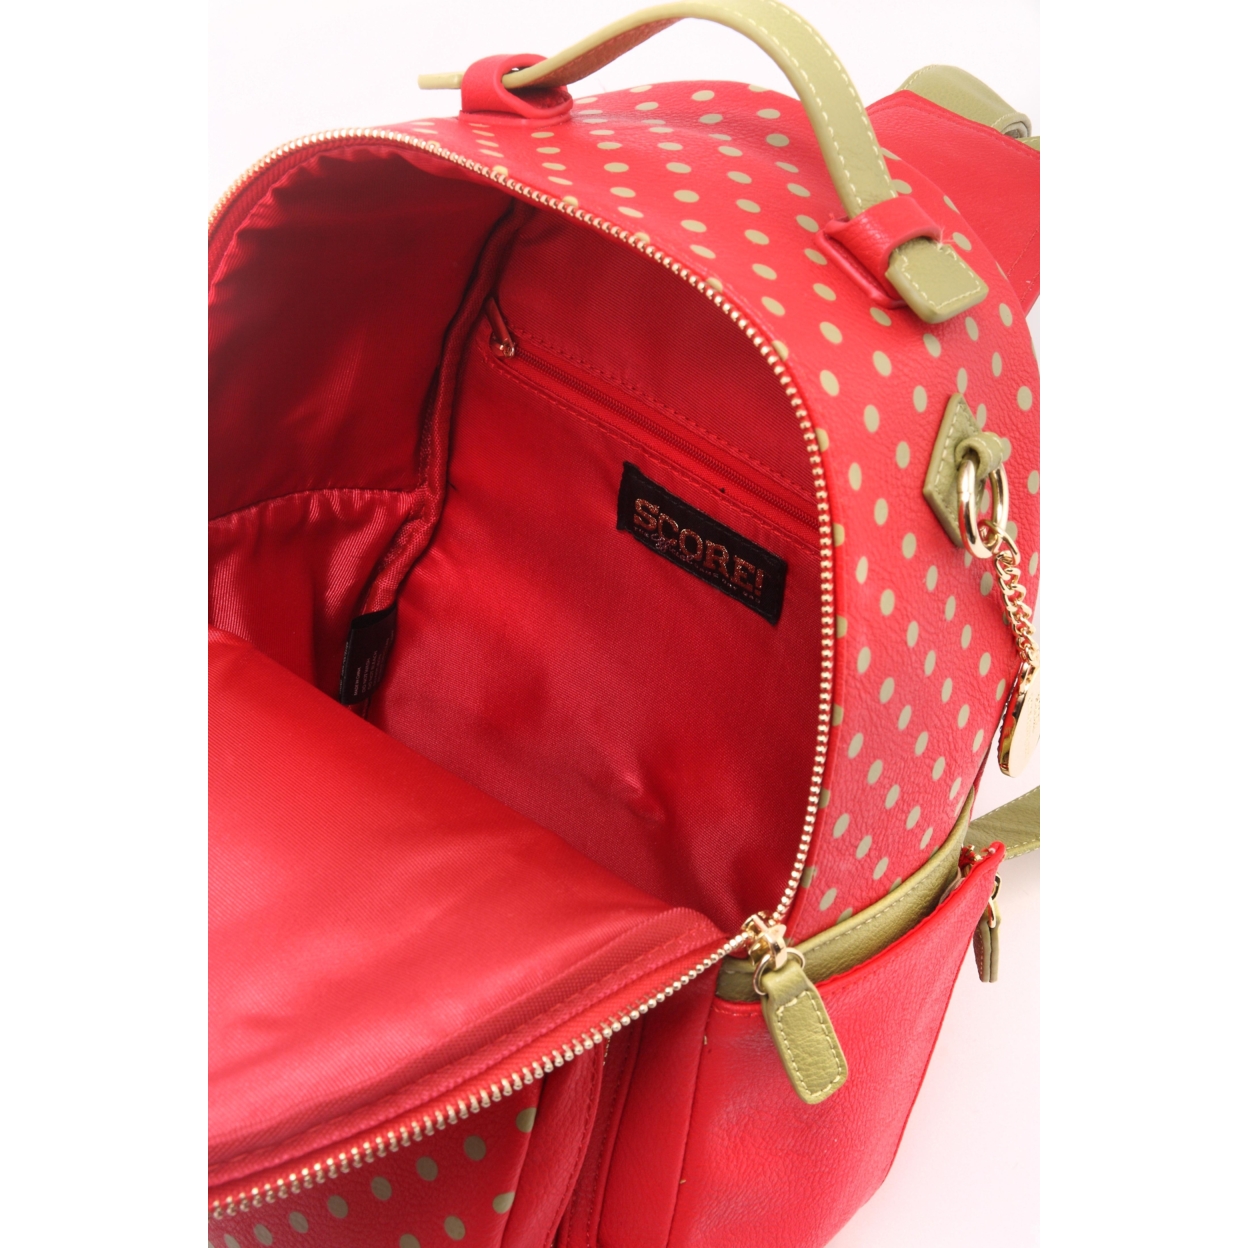 SCORE! Natalie Michelle Medium Polka Dot Designer Backpack - Red And Olive Green